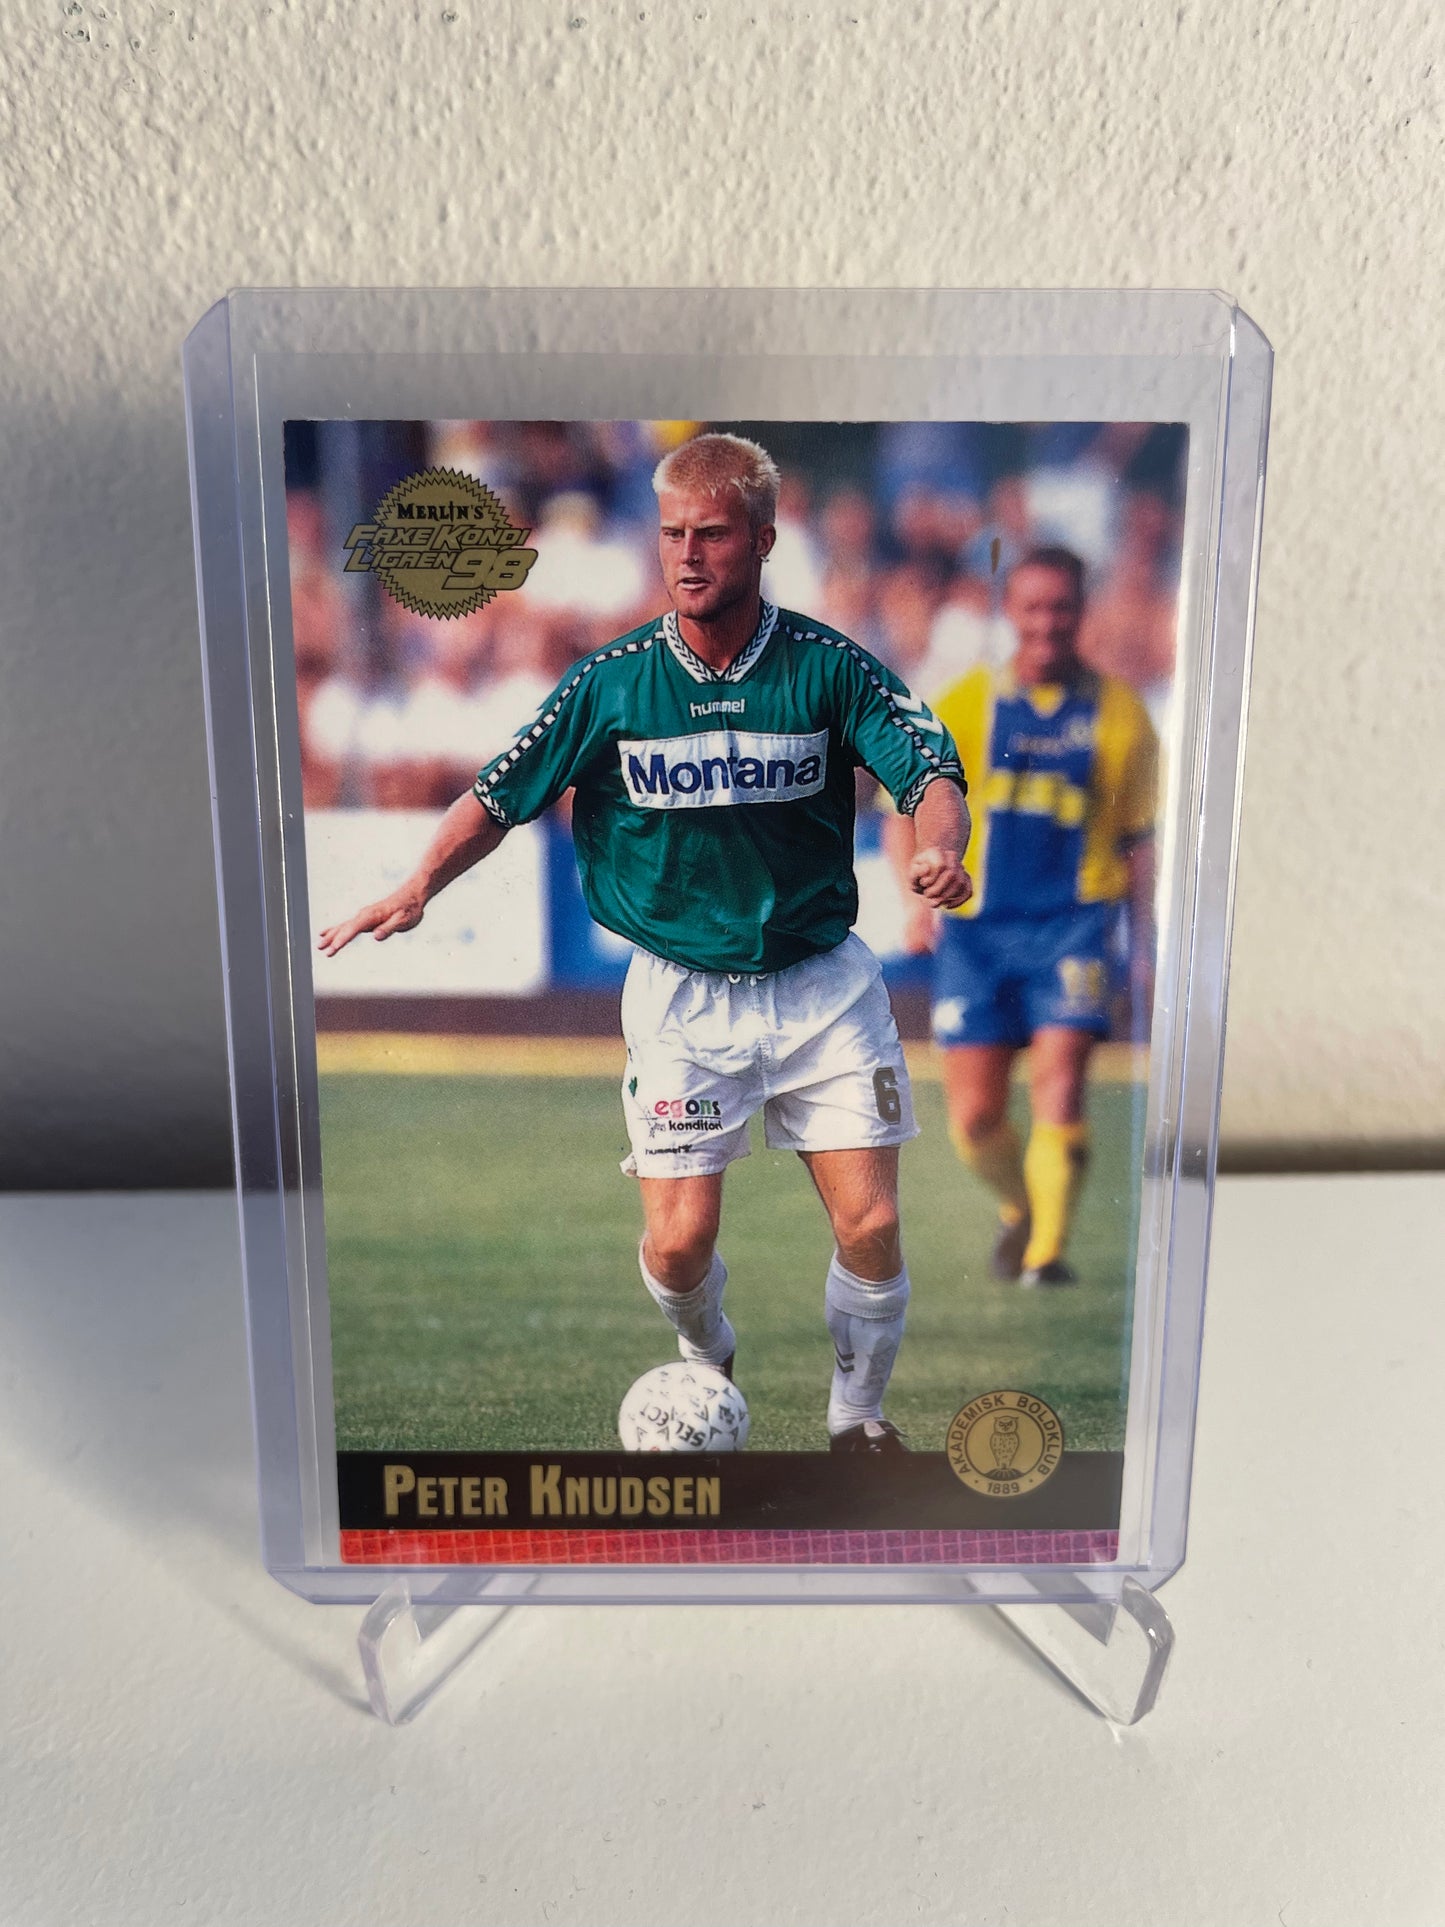 Merlins Faxe Kondi League 97/98 | Peter Knudsen